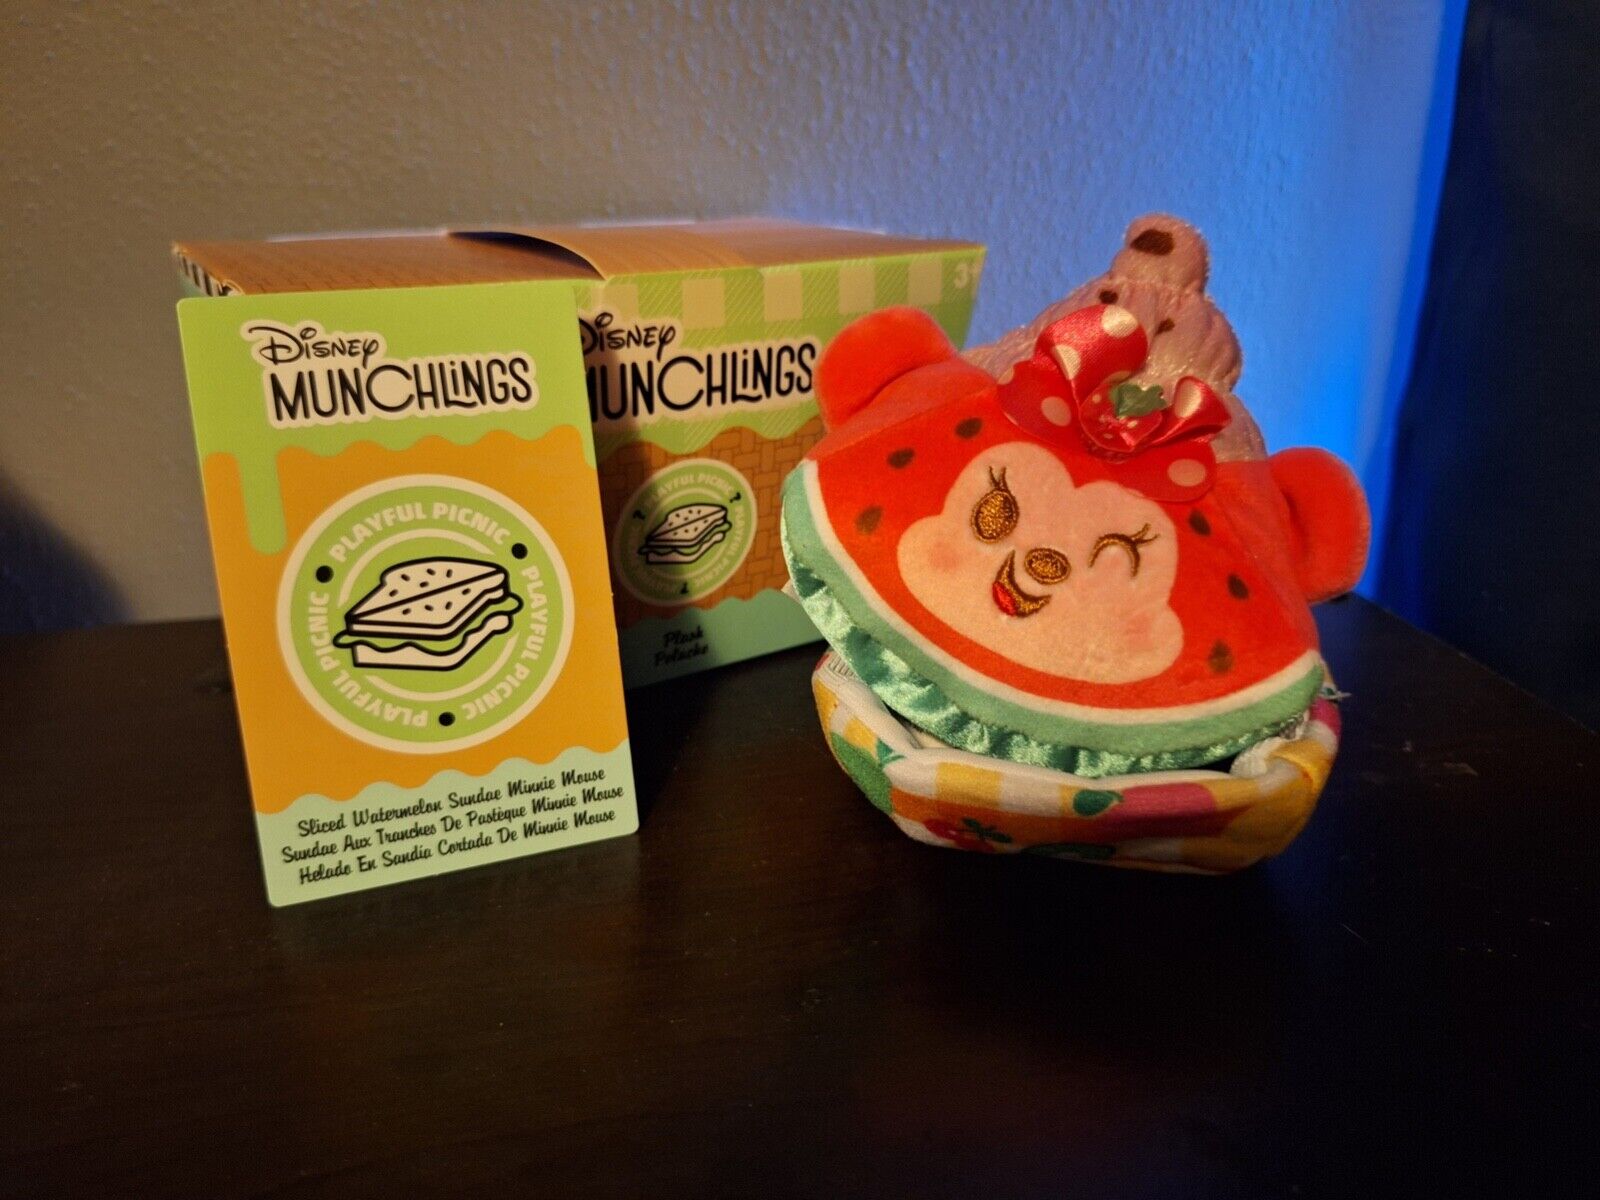 Disney Munchlings Playful Picnic Mini Mouse